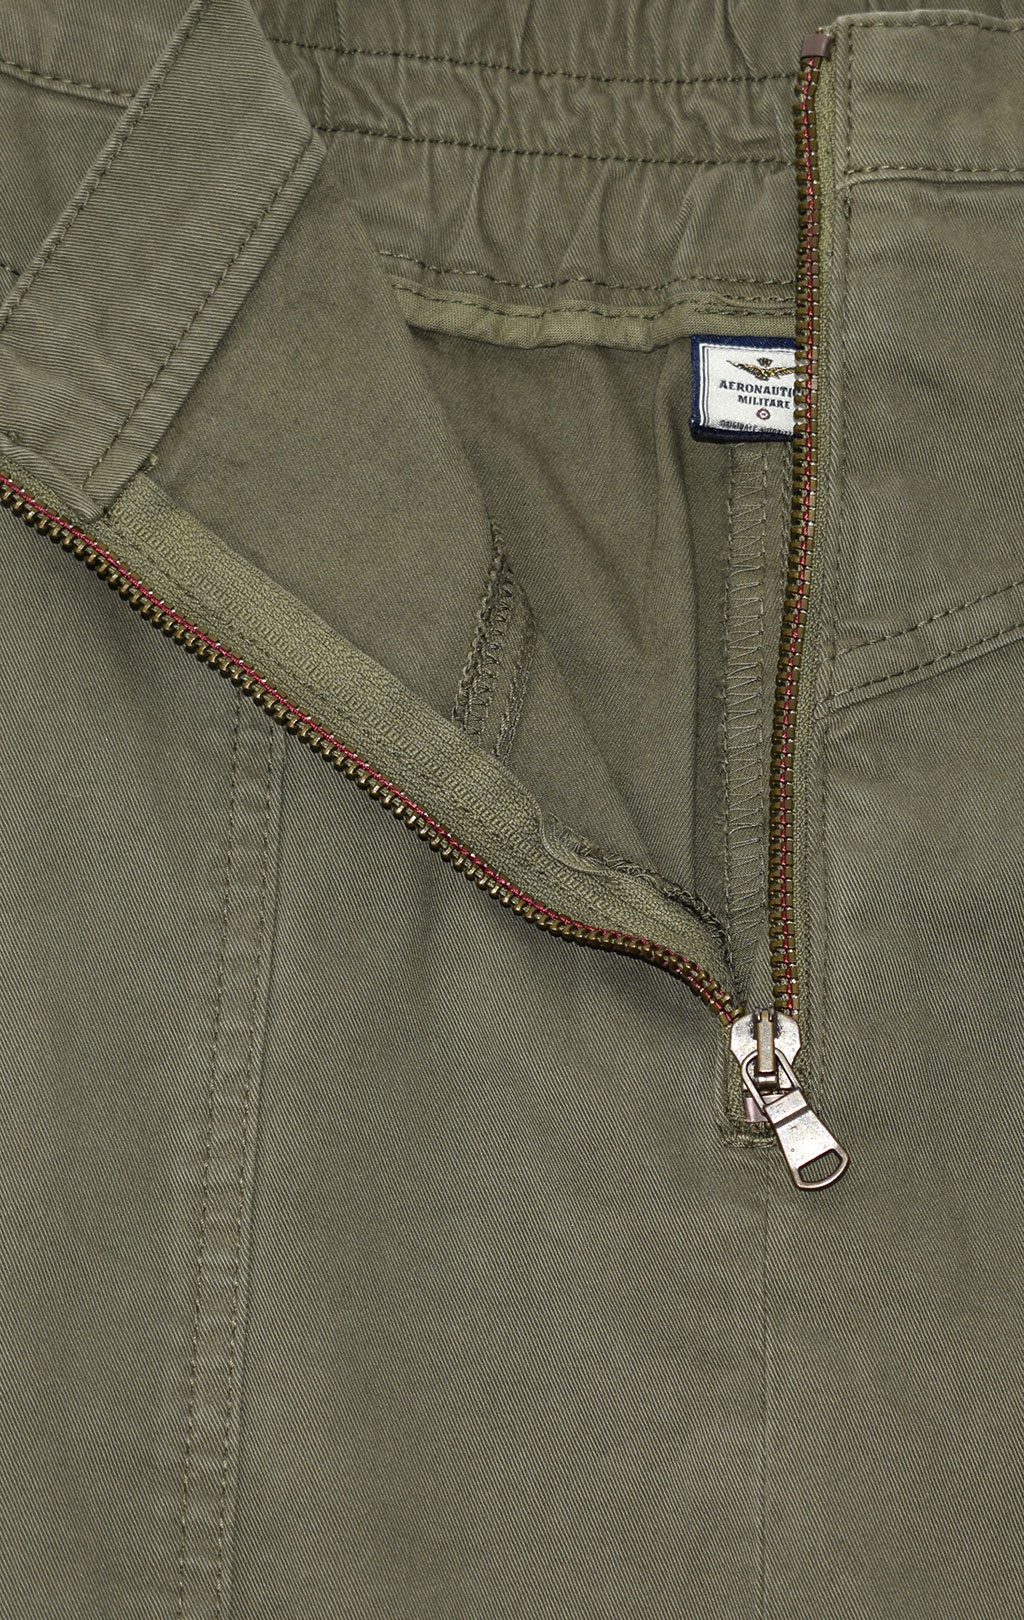 Женская юбка AERONAUTICA MILITARE FW 20/21/AL verde militare (GO 951) 